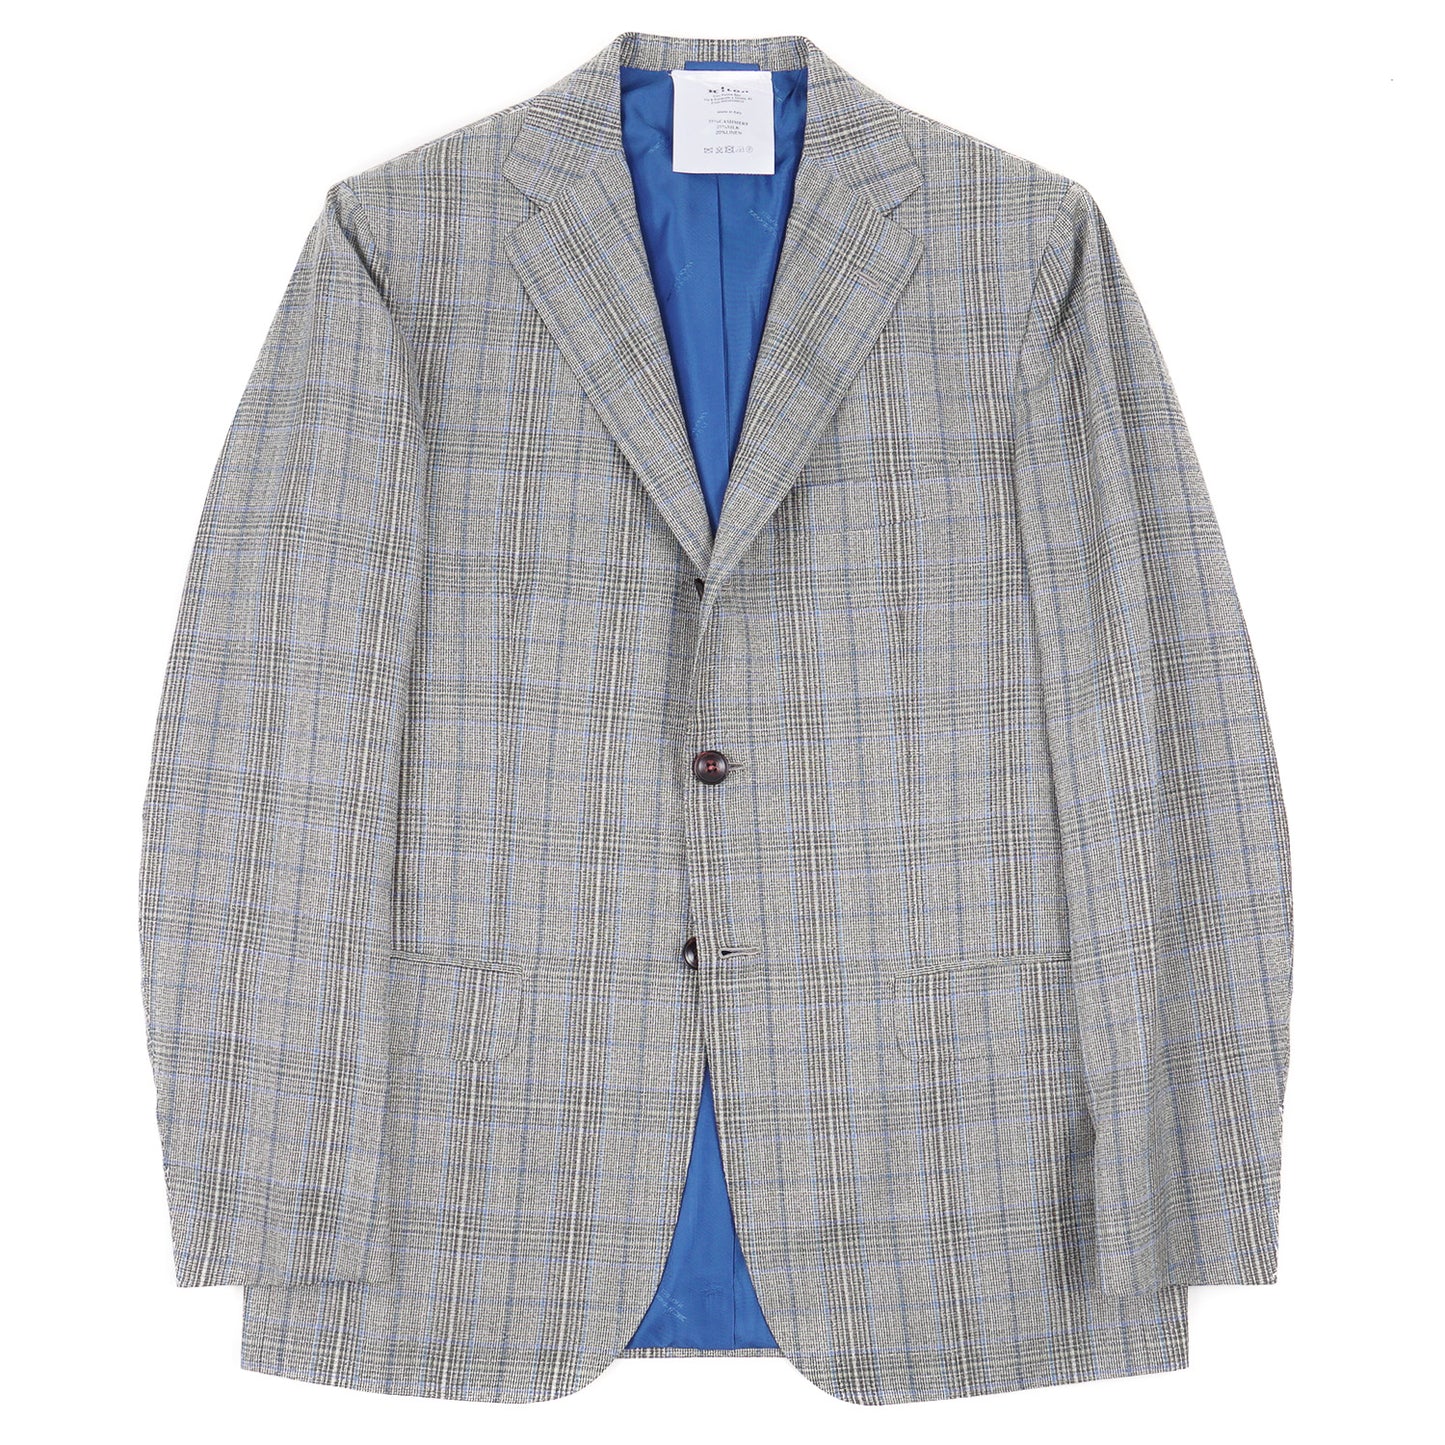 Kiton Cashmere Silk and Linen Sport Coat - Top Shelf Apparel